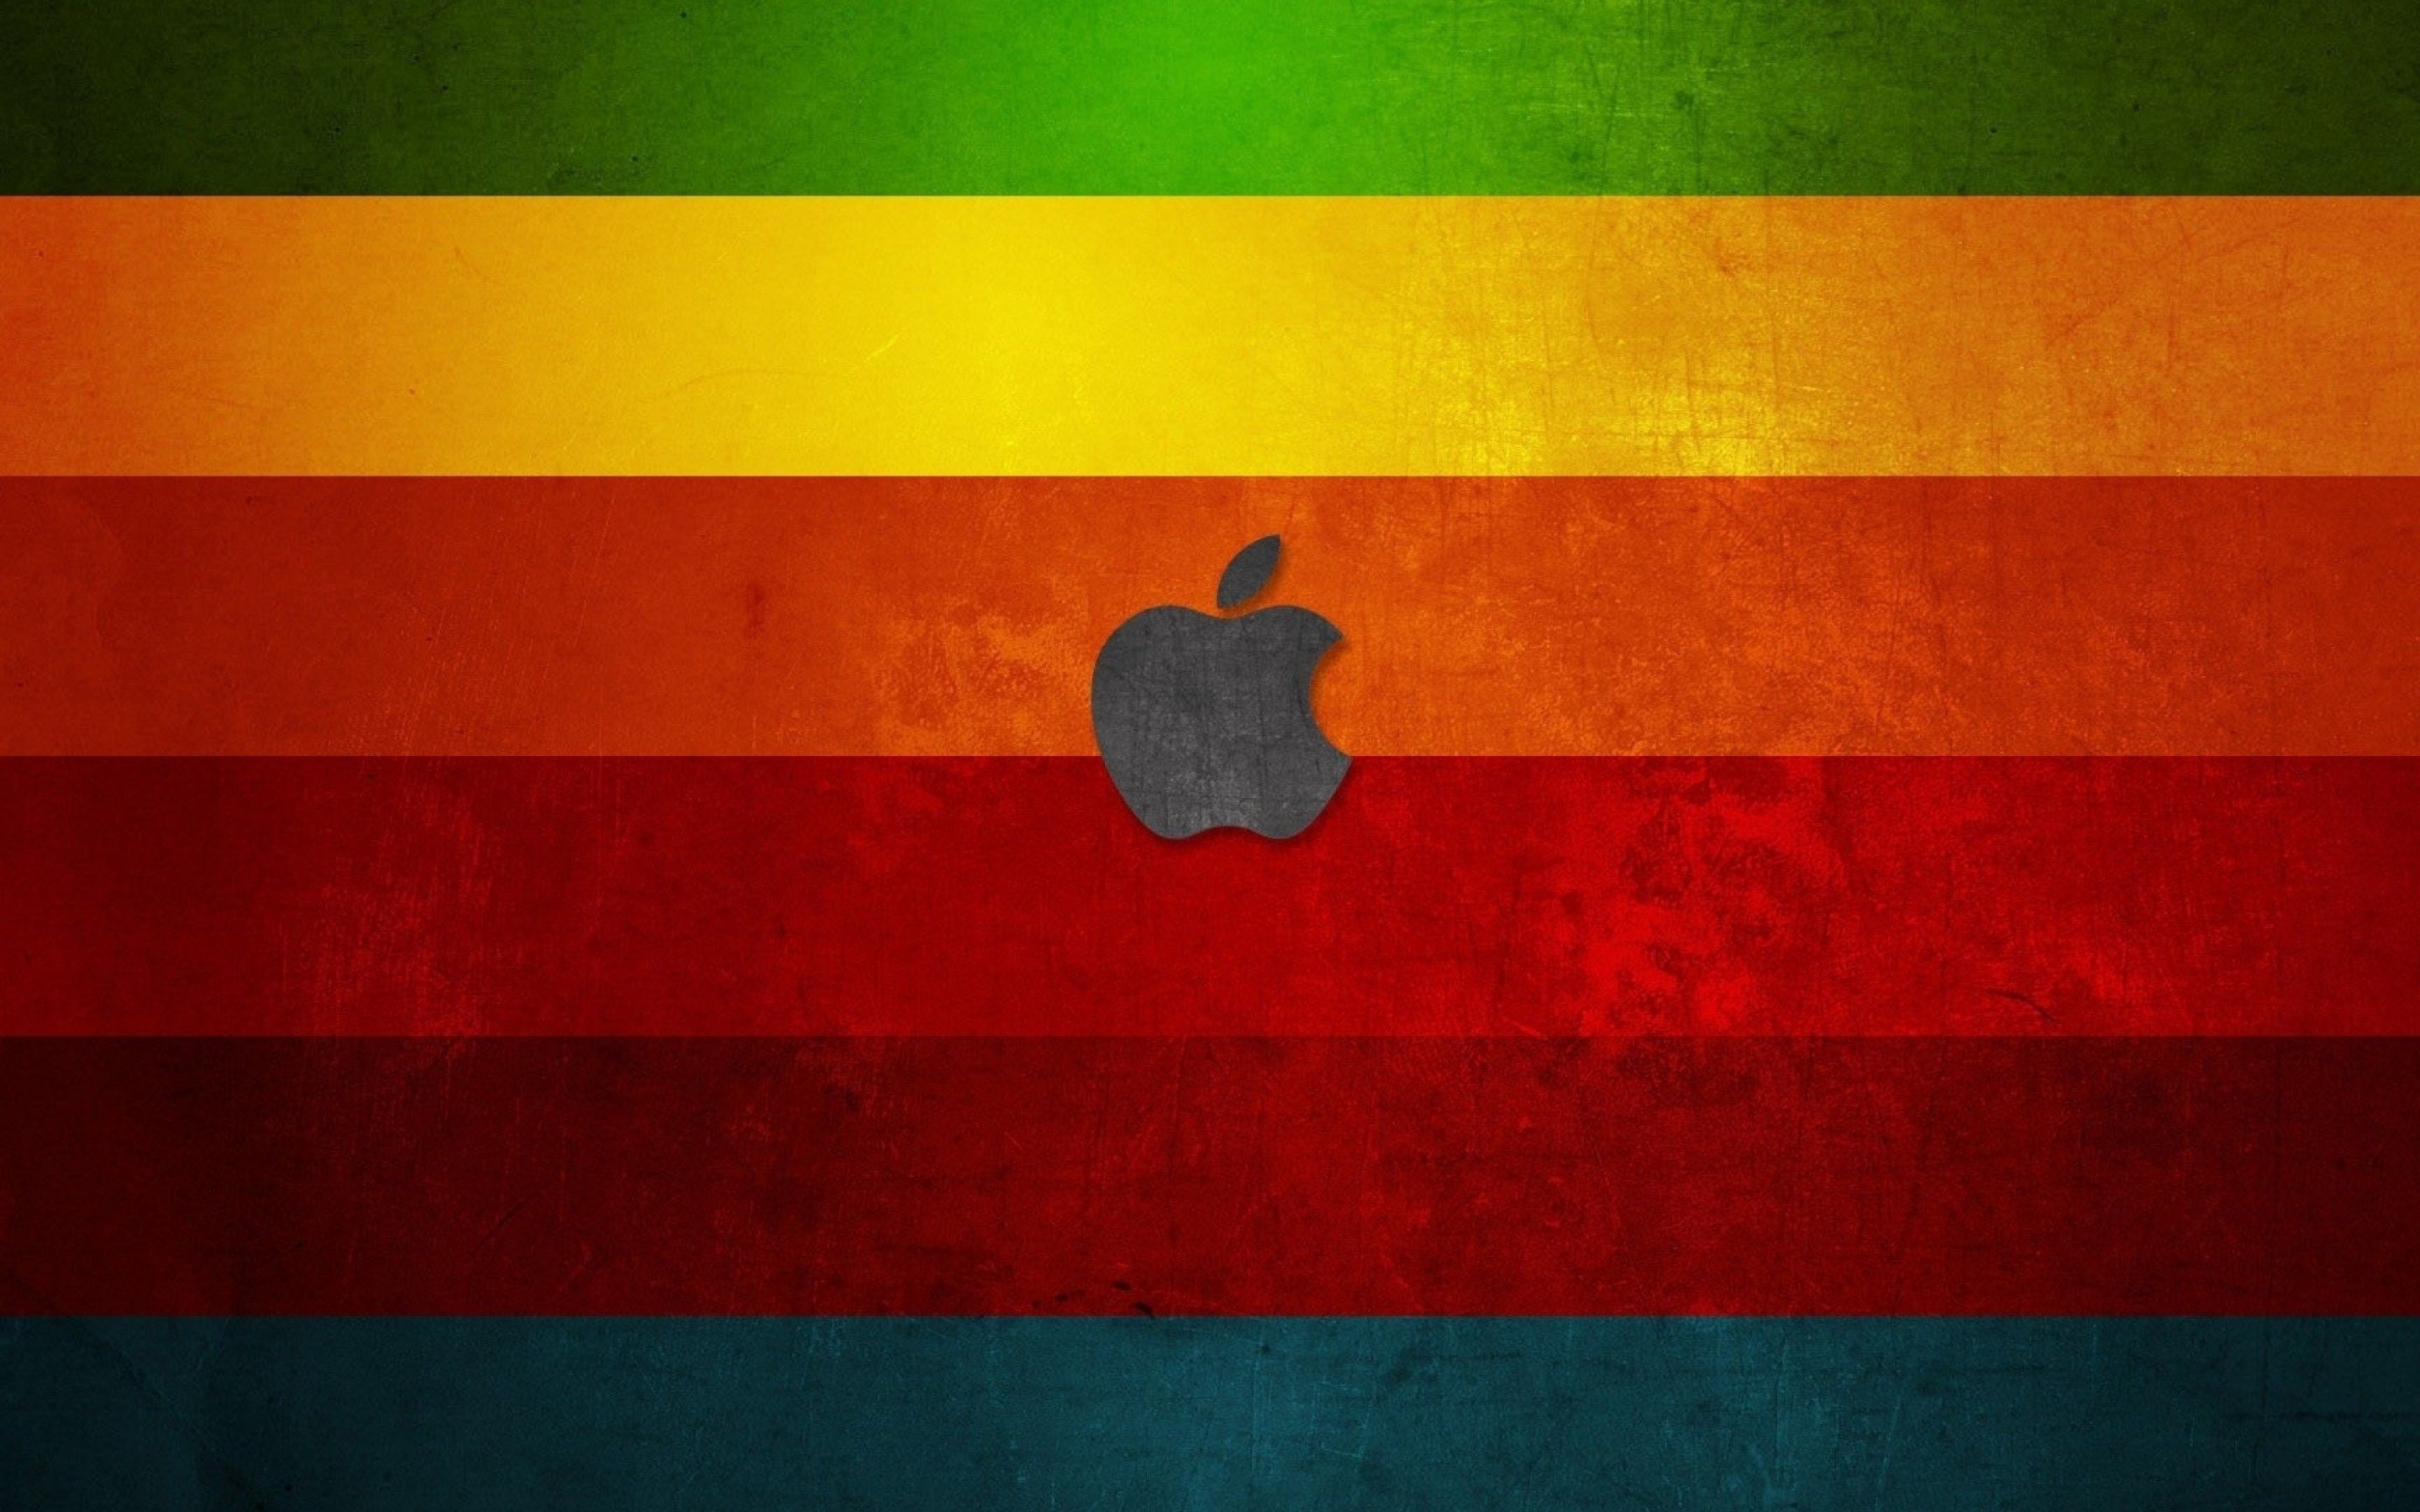 Apple Macbook Wallpaper Backgrounds Group (81+)